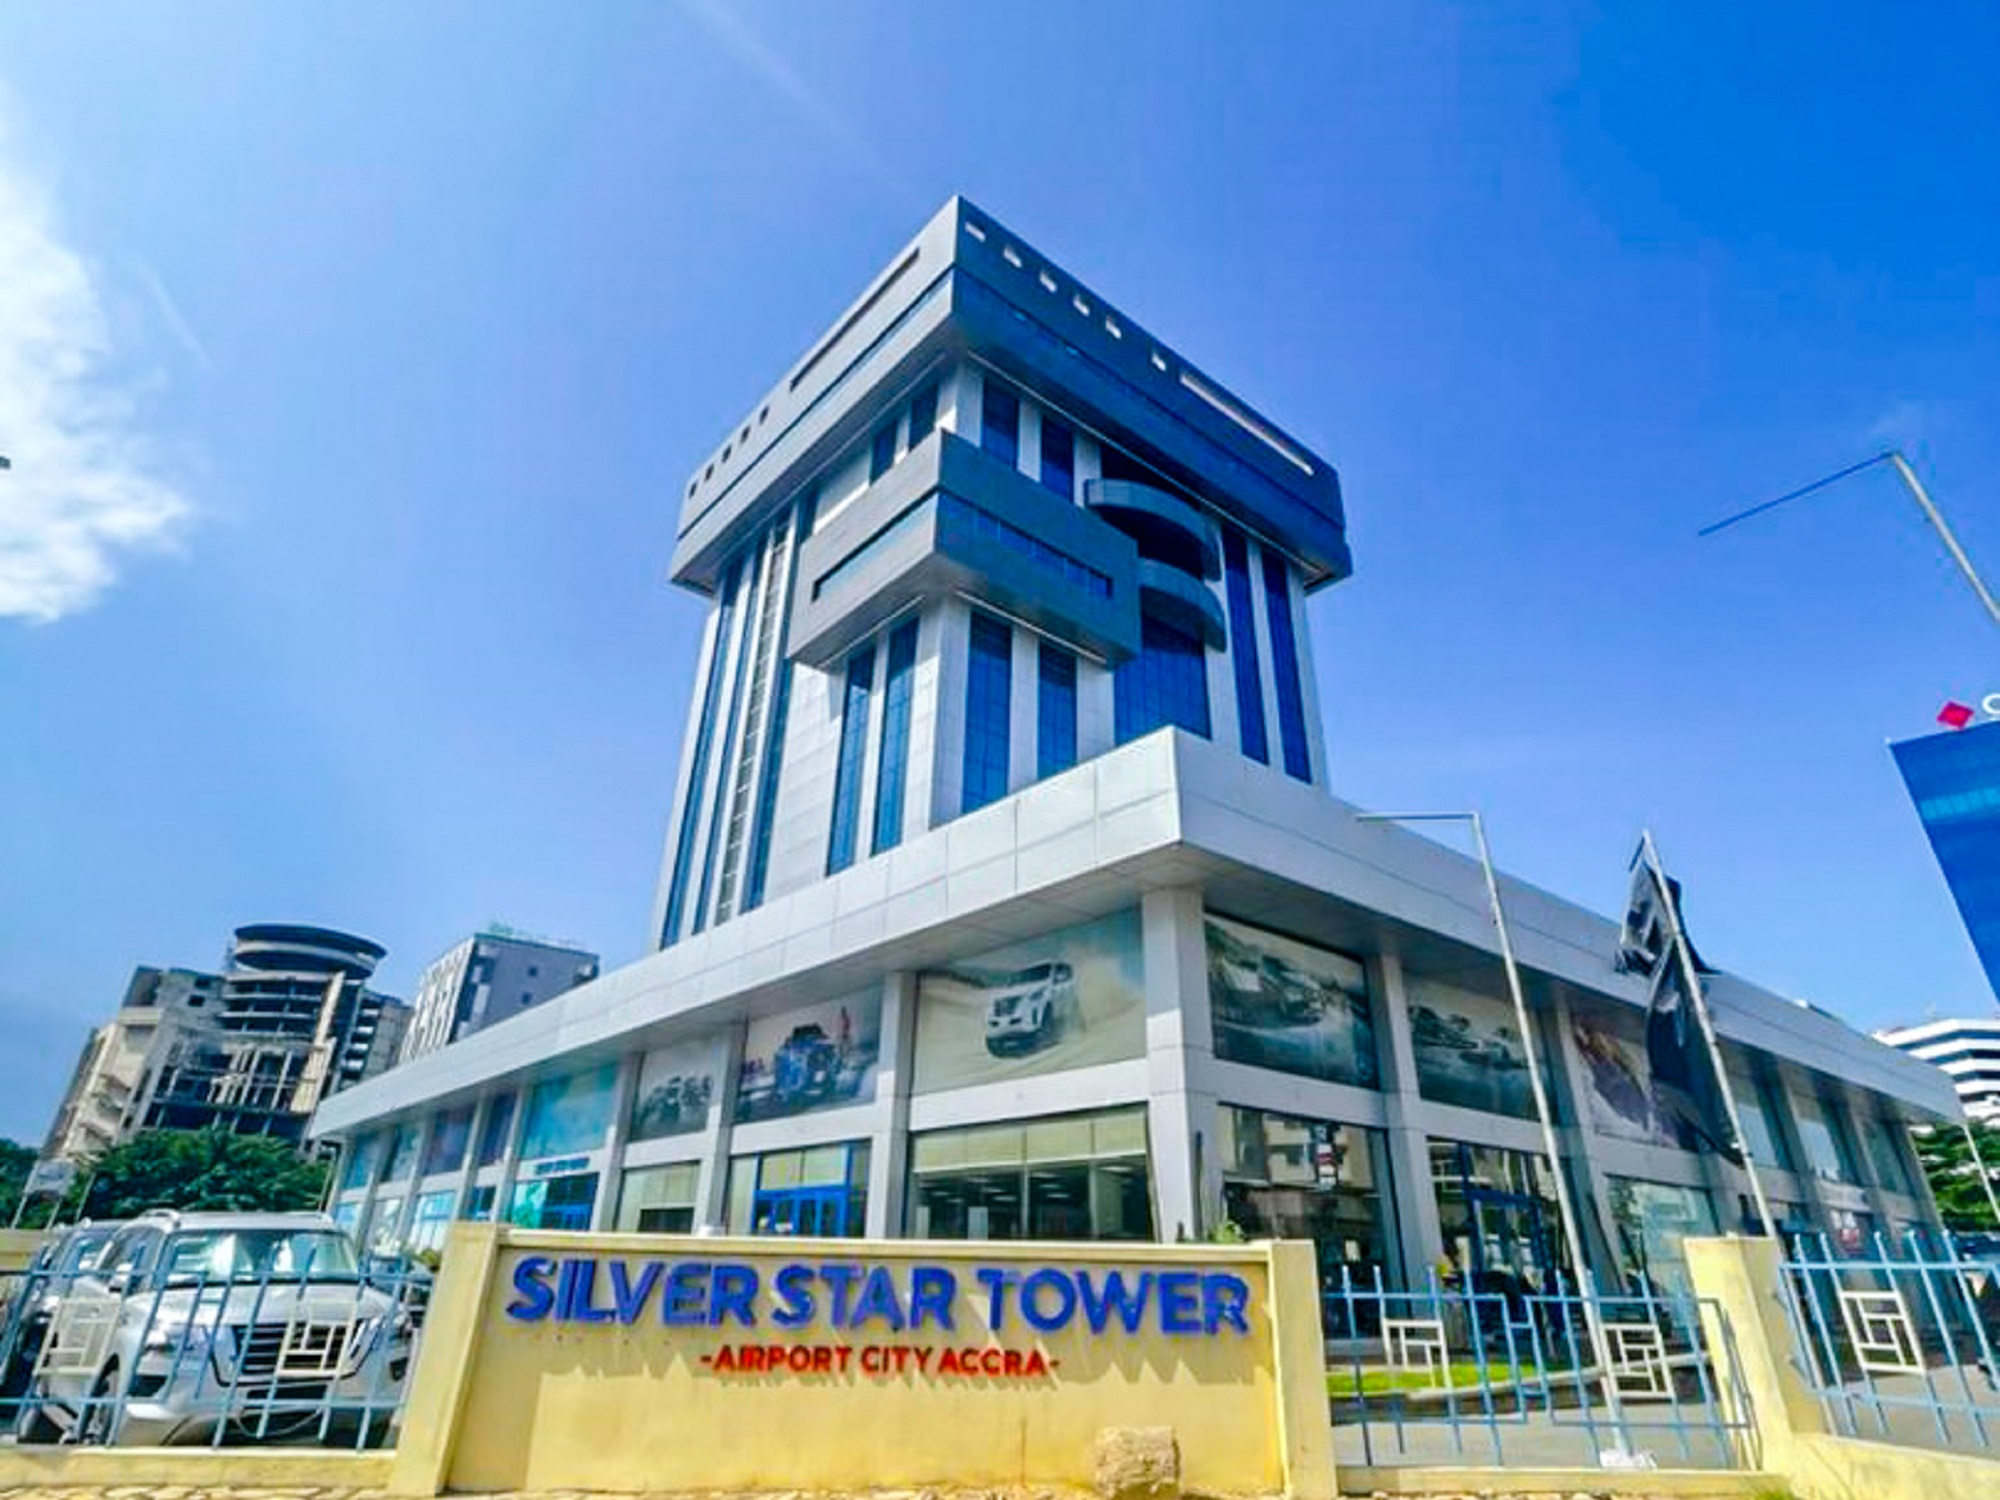 Silverstar-Tower-Accra-21.06-4-1